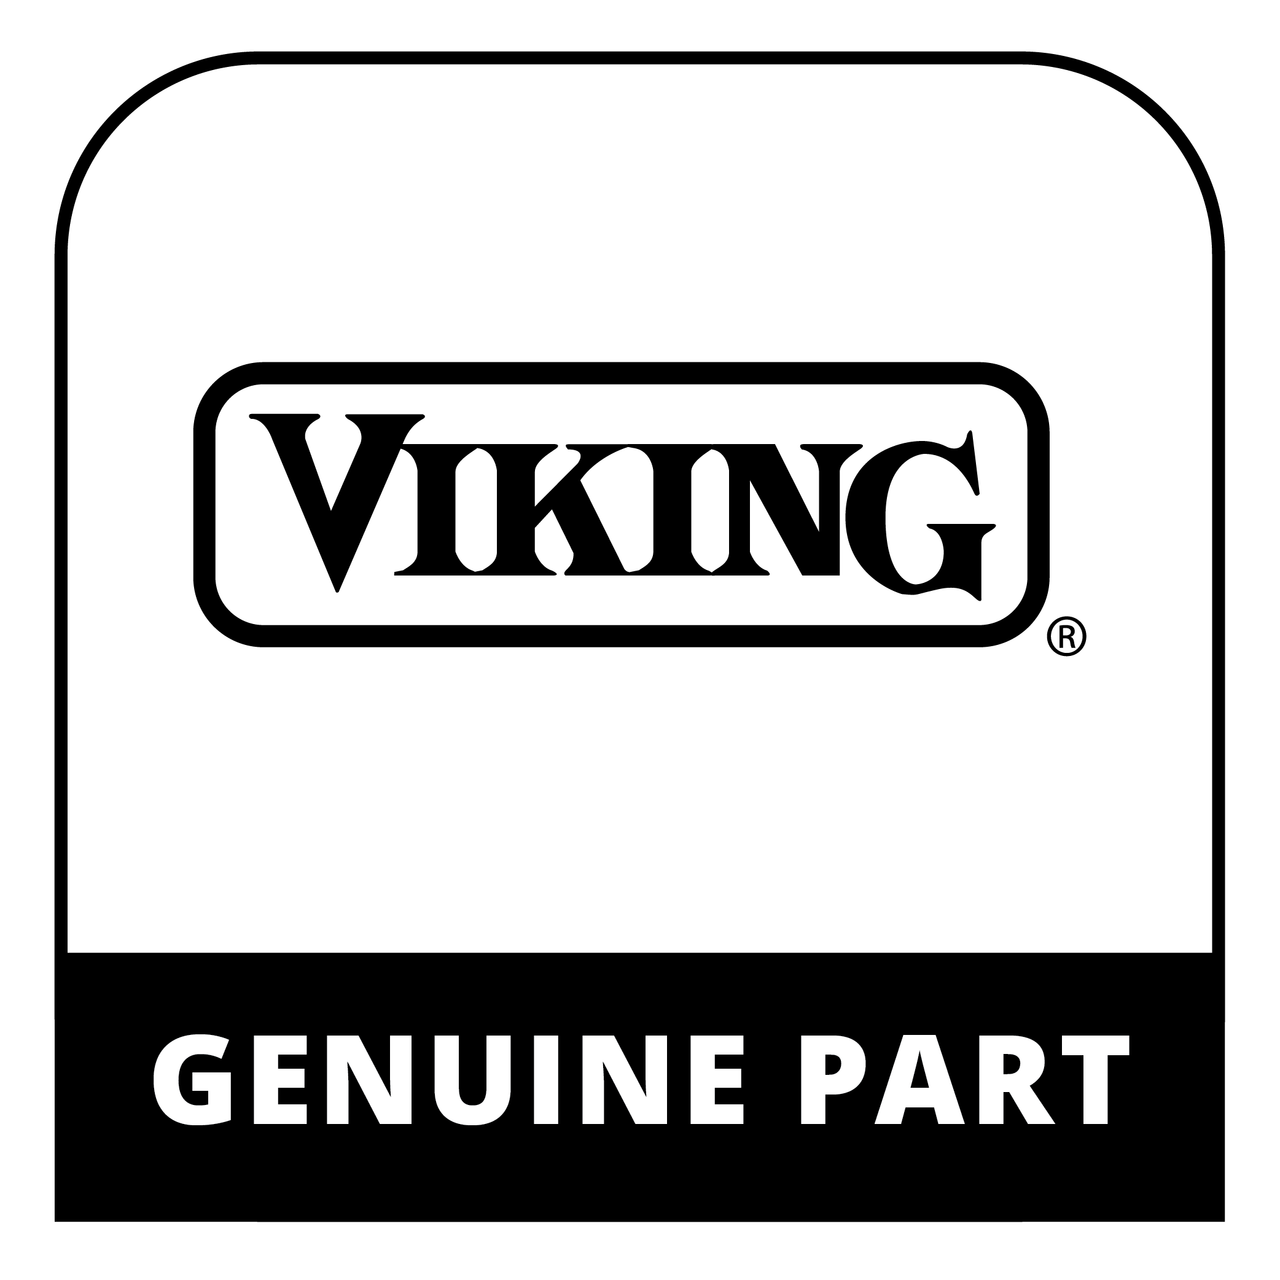 Viking A39800-001 - Top Panel Viking - Genuine Viking Part